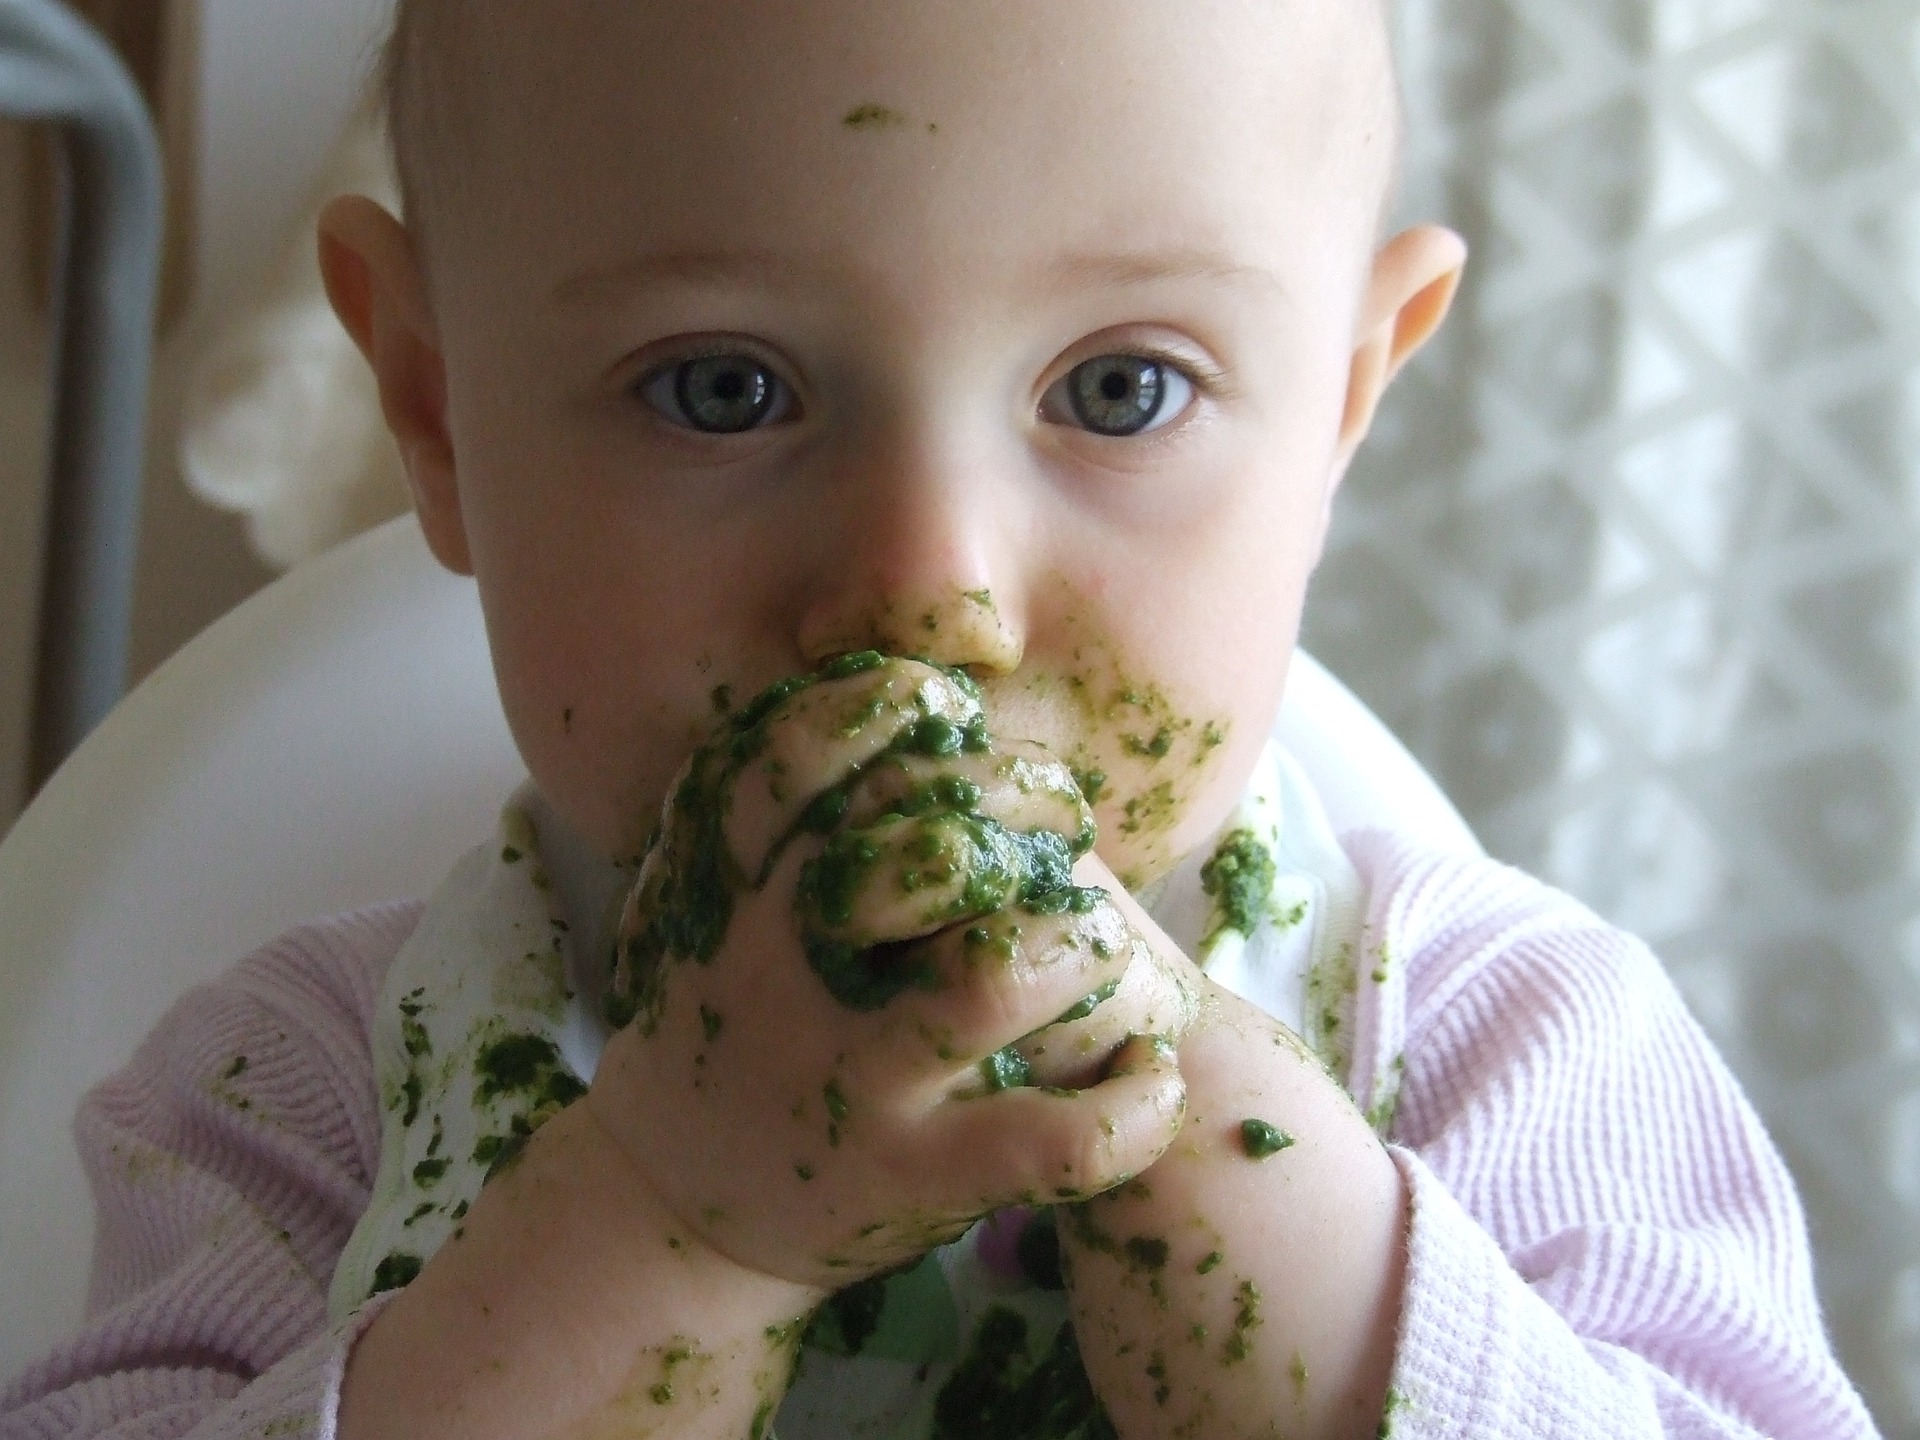 Un bambino mangia verdure foto di Ajale, licenza Pixabay